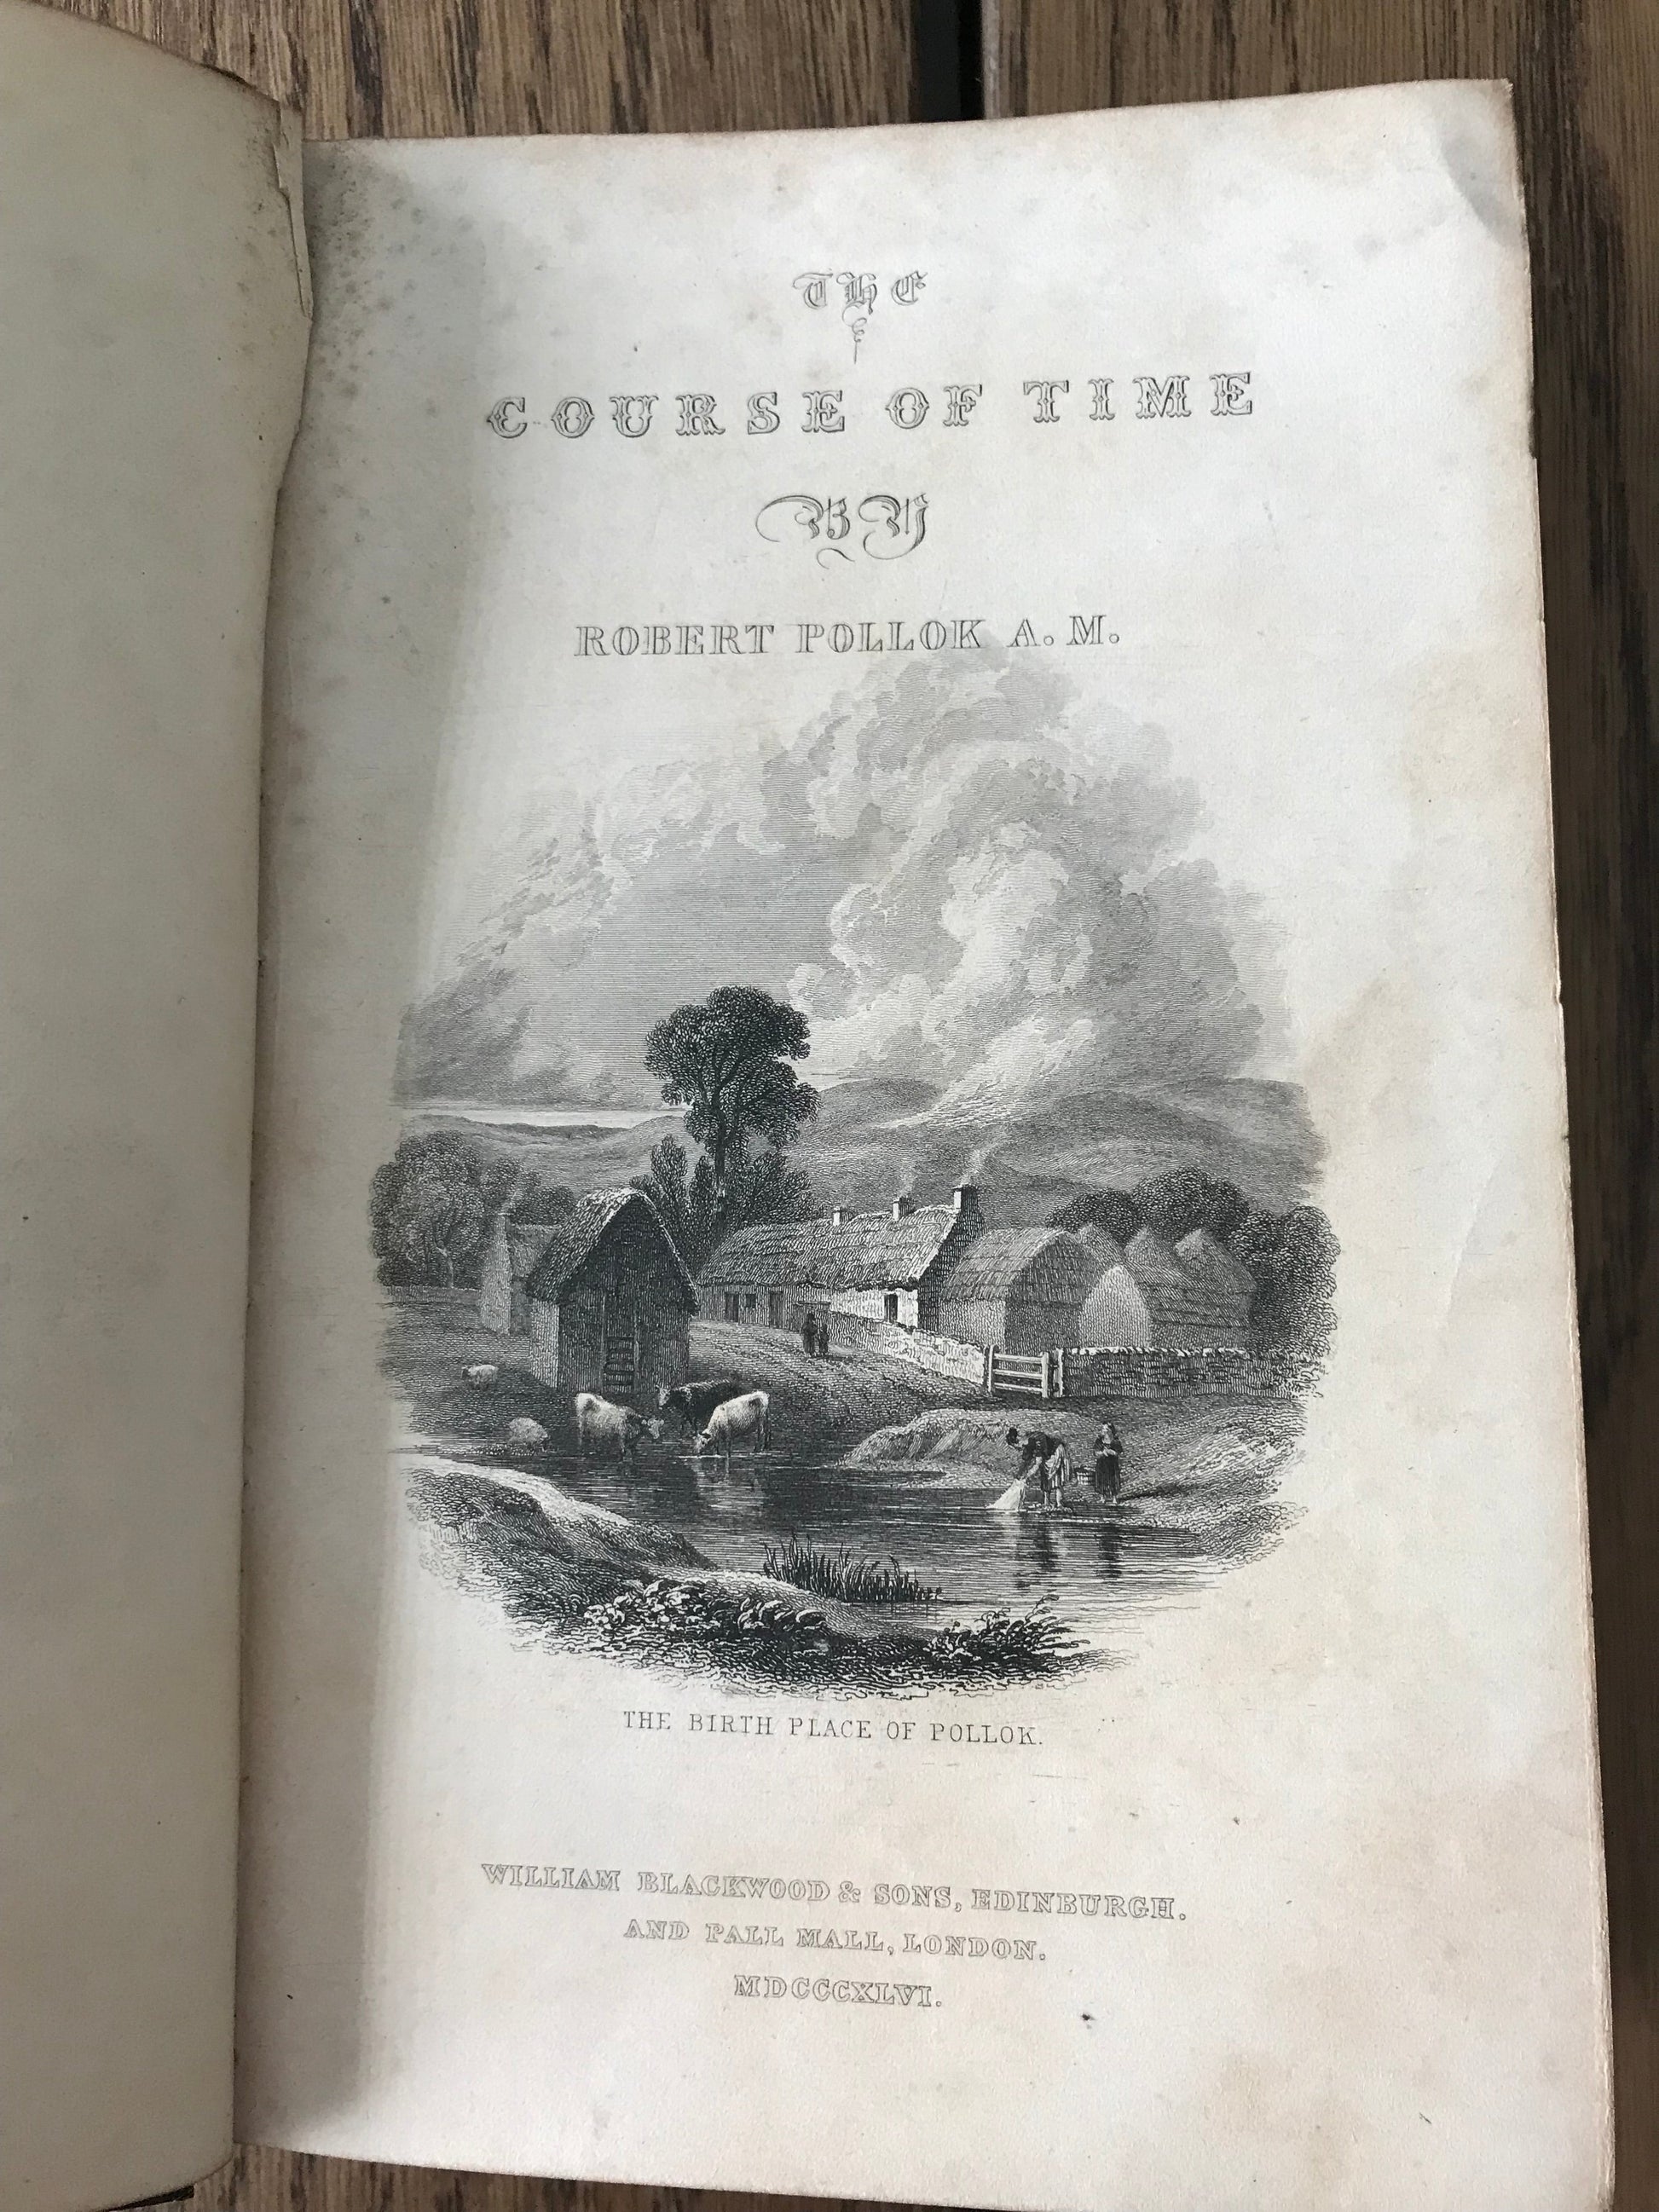 THE COURSE OF TIME - ROBERT POLLOK, A.M. BooksCardsNBikes